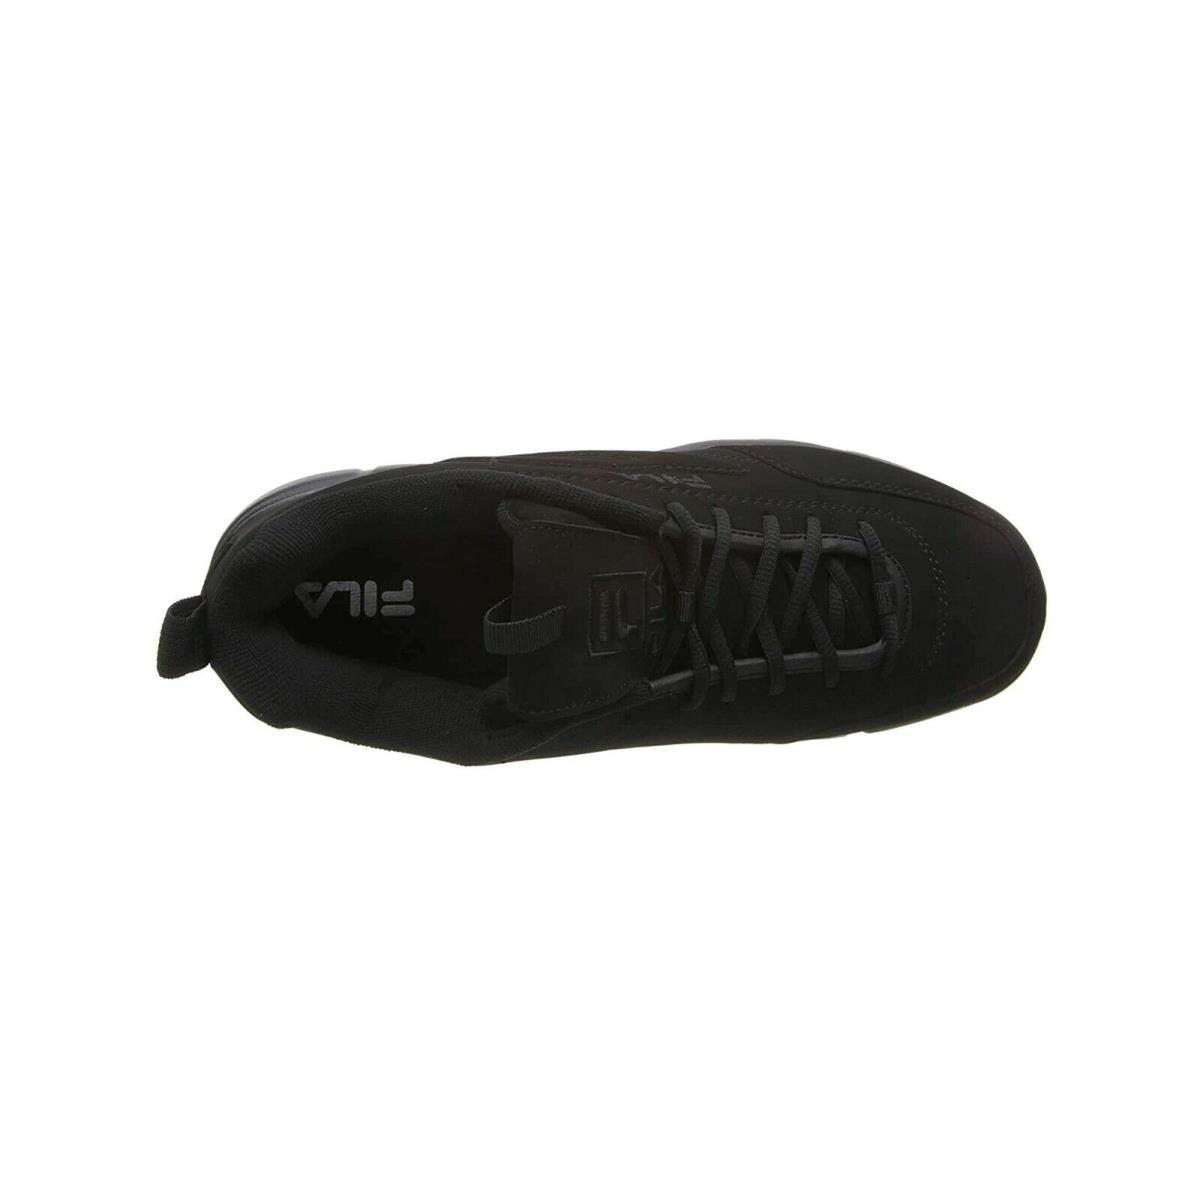 Fila shoes Disruptor - Black 3